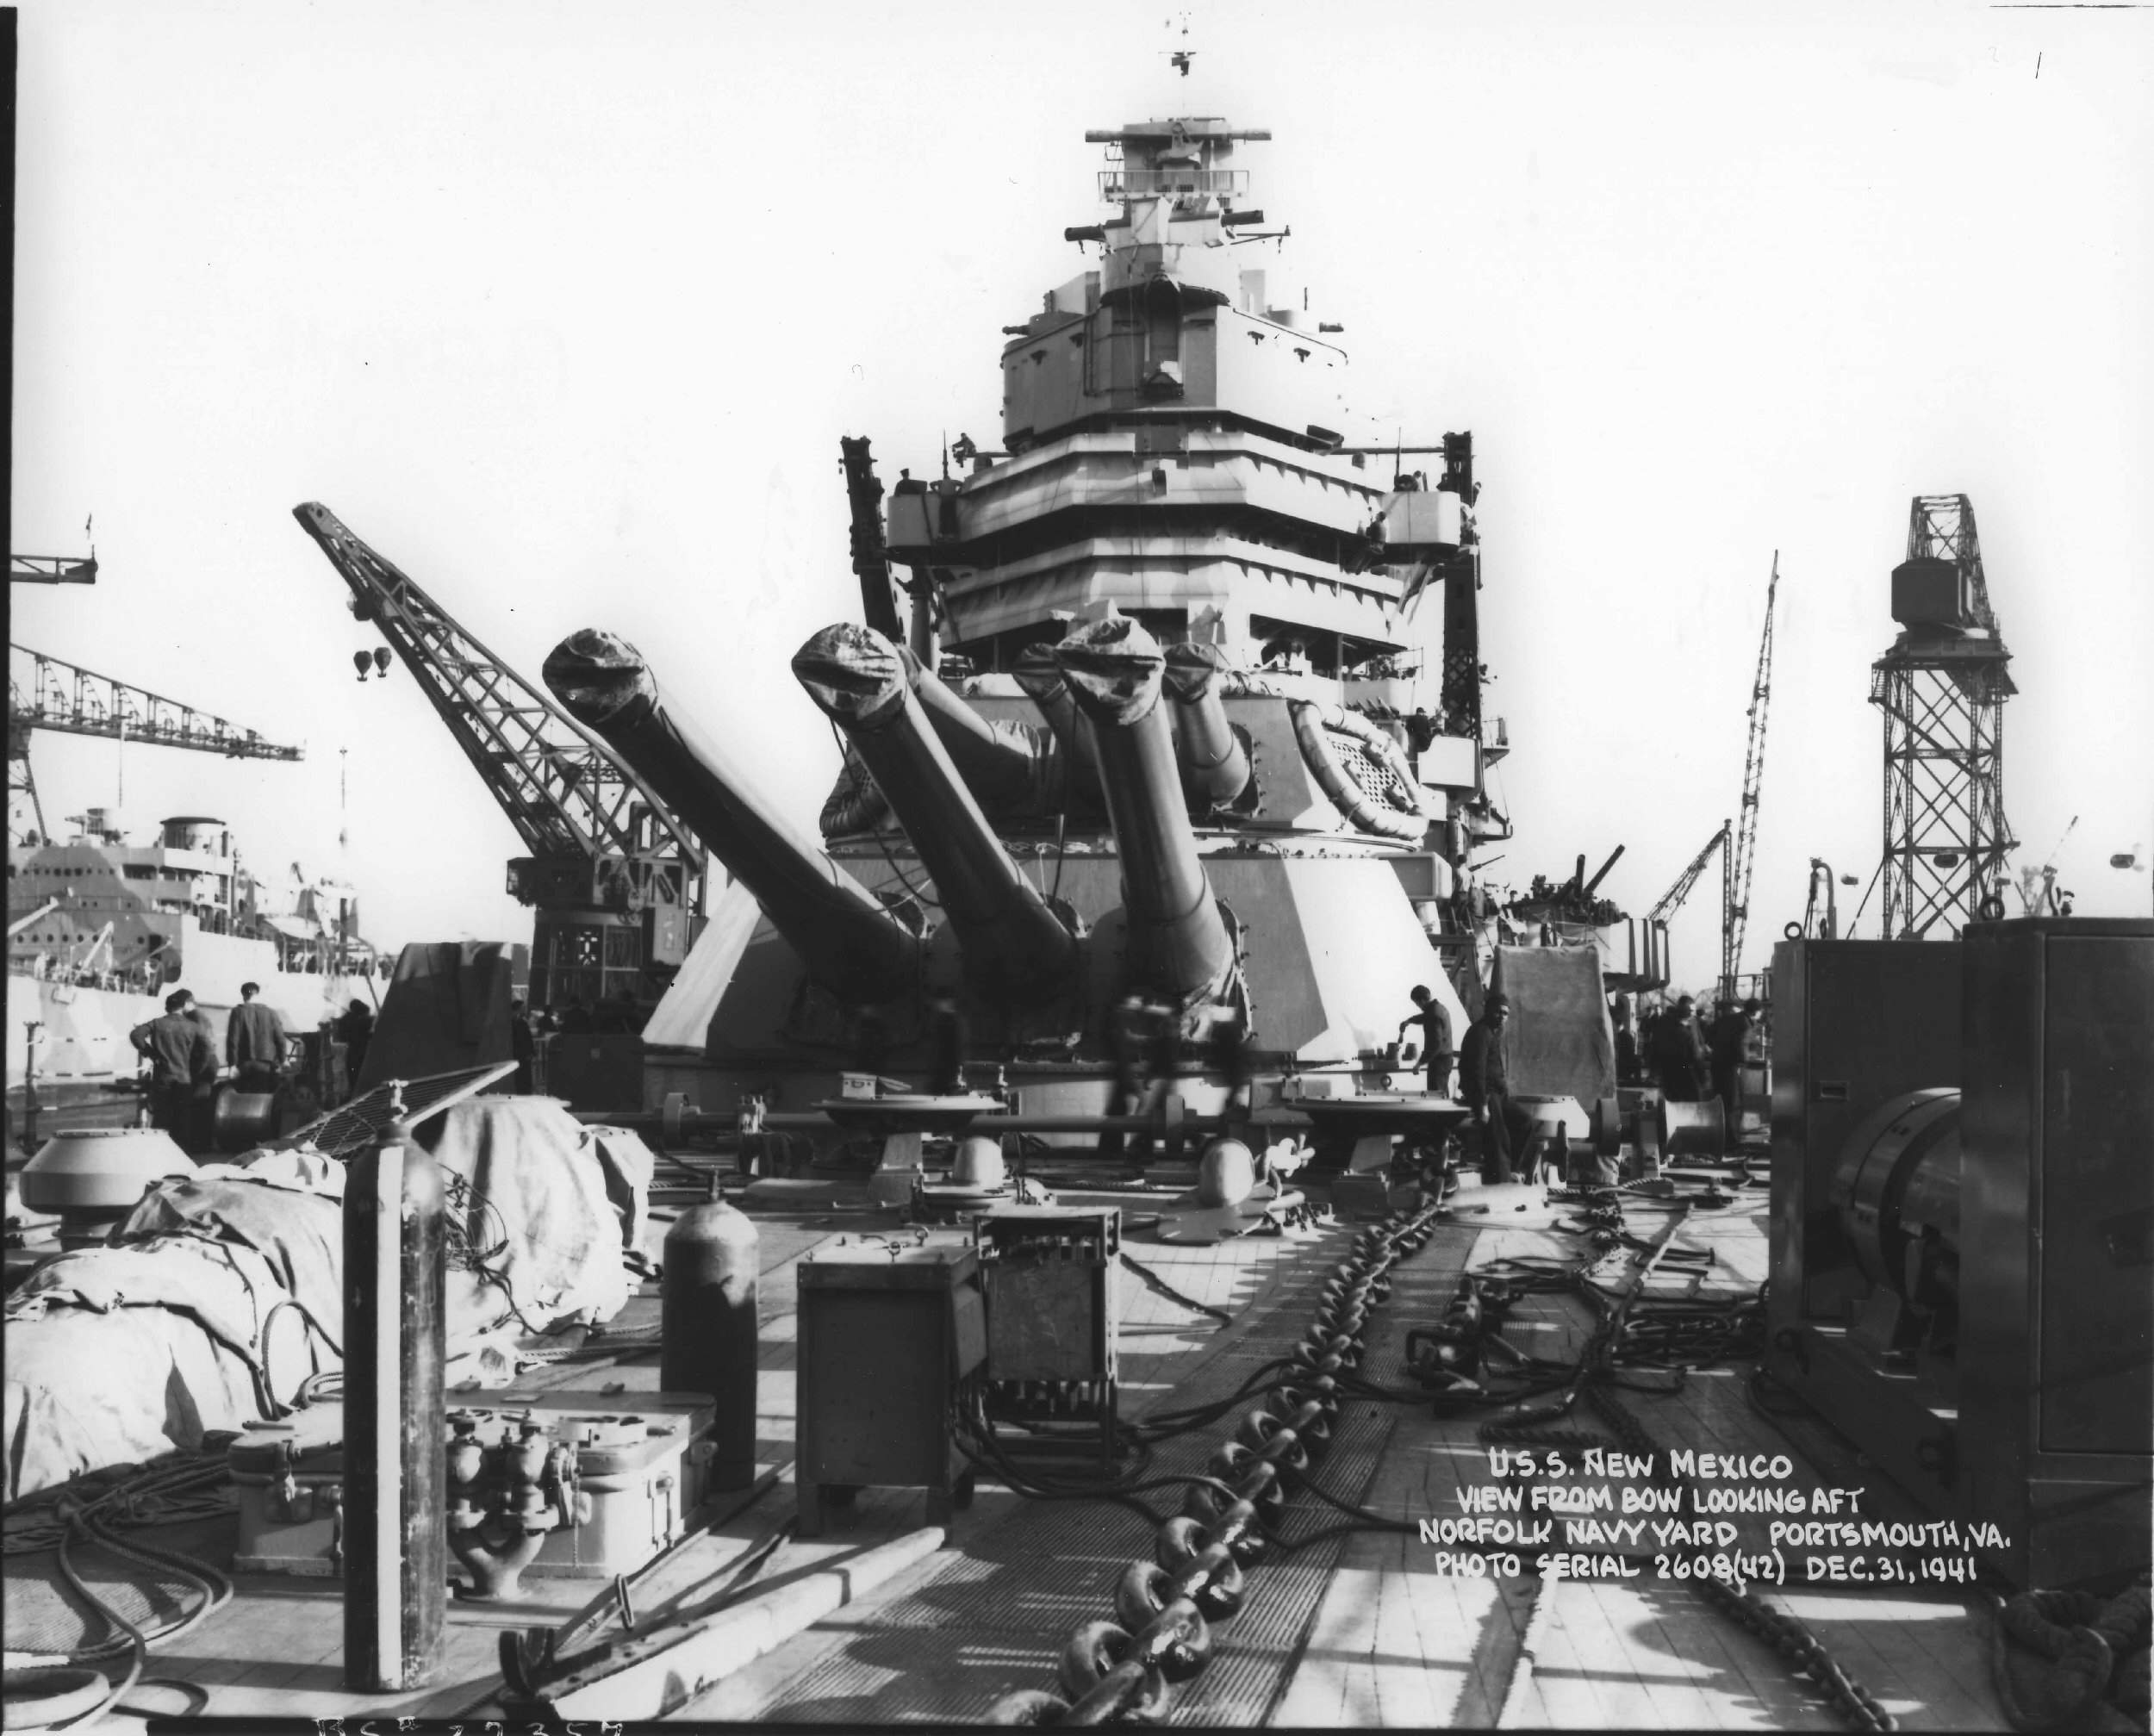 USS New Mexico, Norfolk Navy Yard, Portsmouth, Virginia, United States, 31 Dec 1941, photo 3 of 5